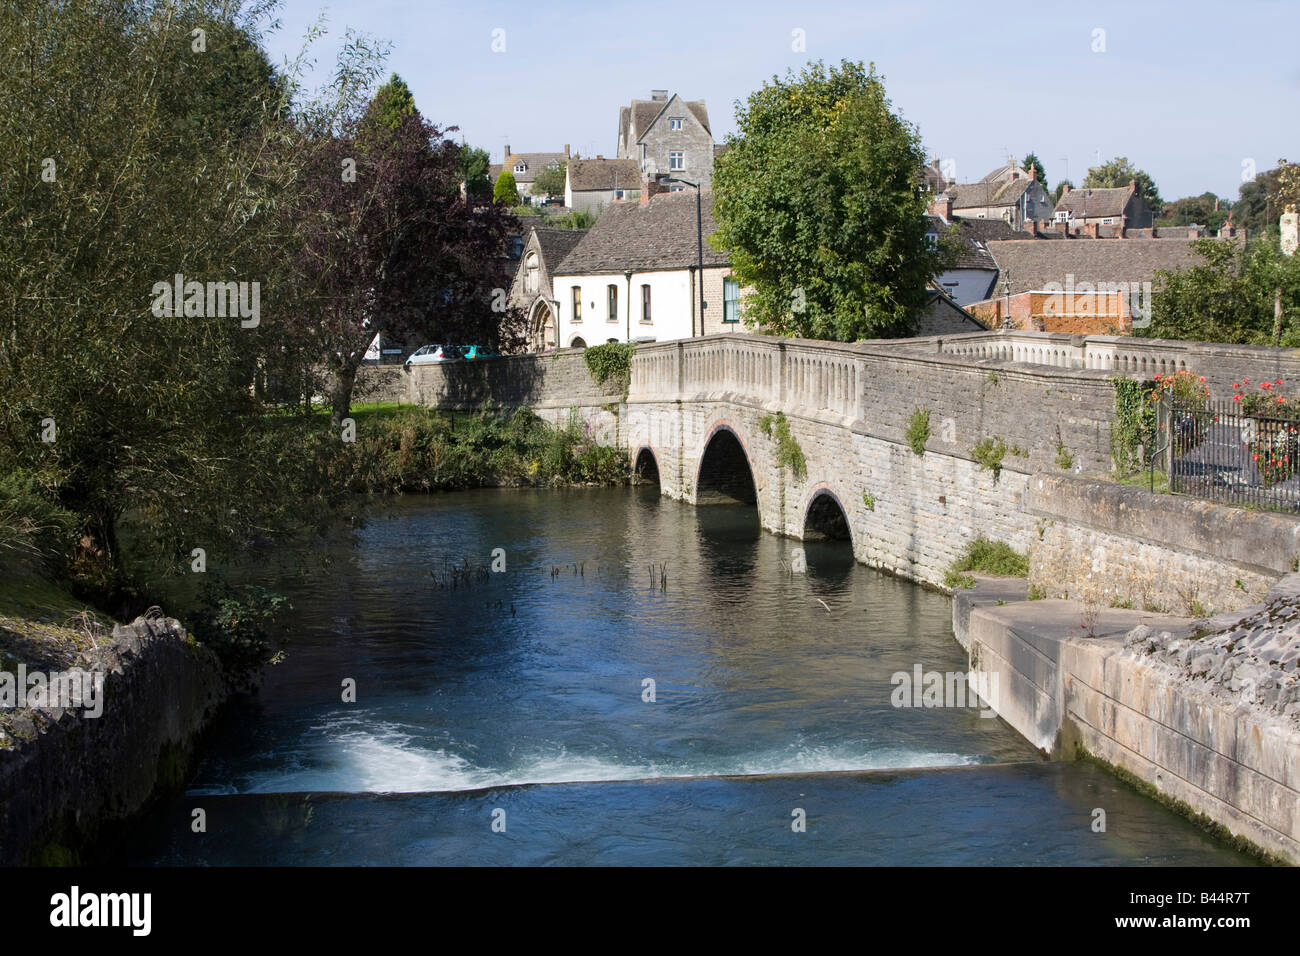 stone arched bridge  Malmesbury town centre wiltshire england uk gb Stock Photo